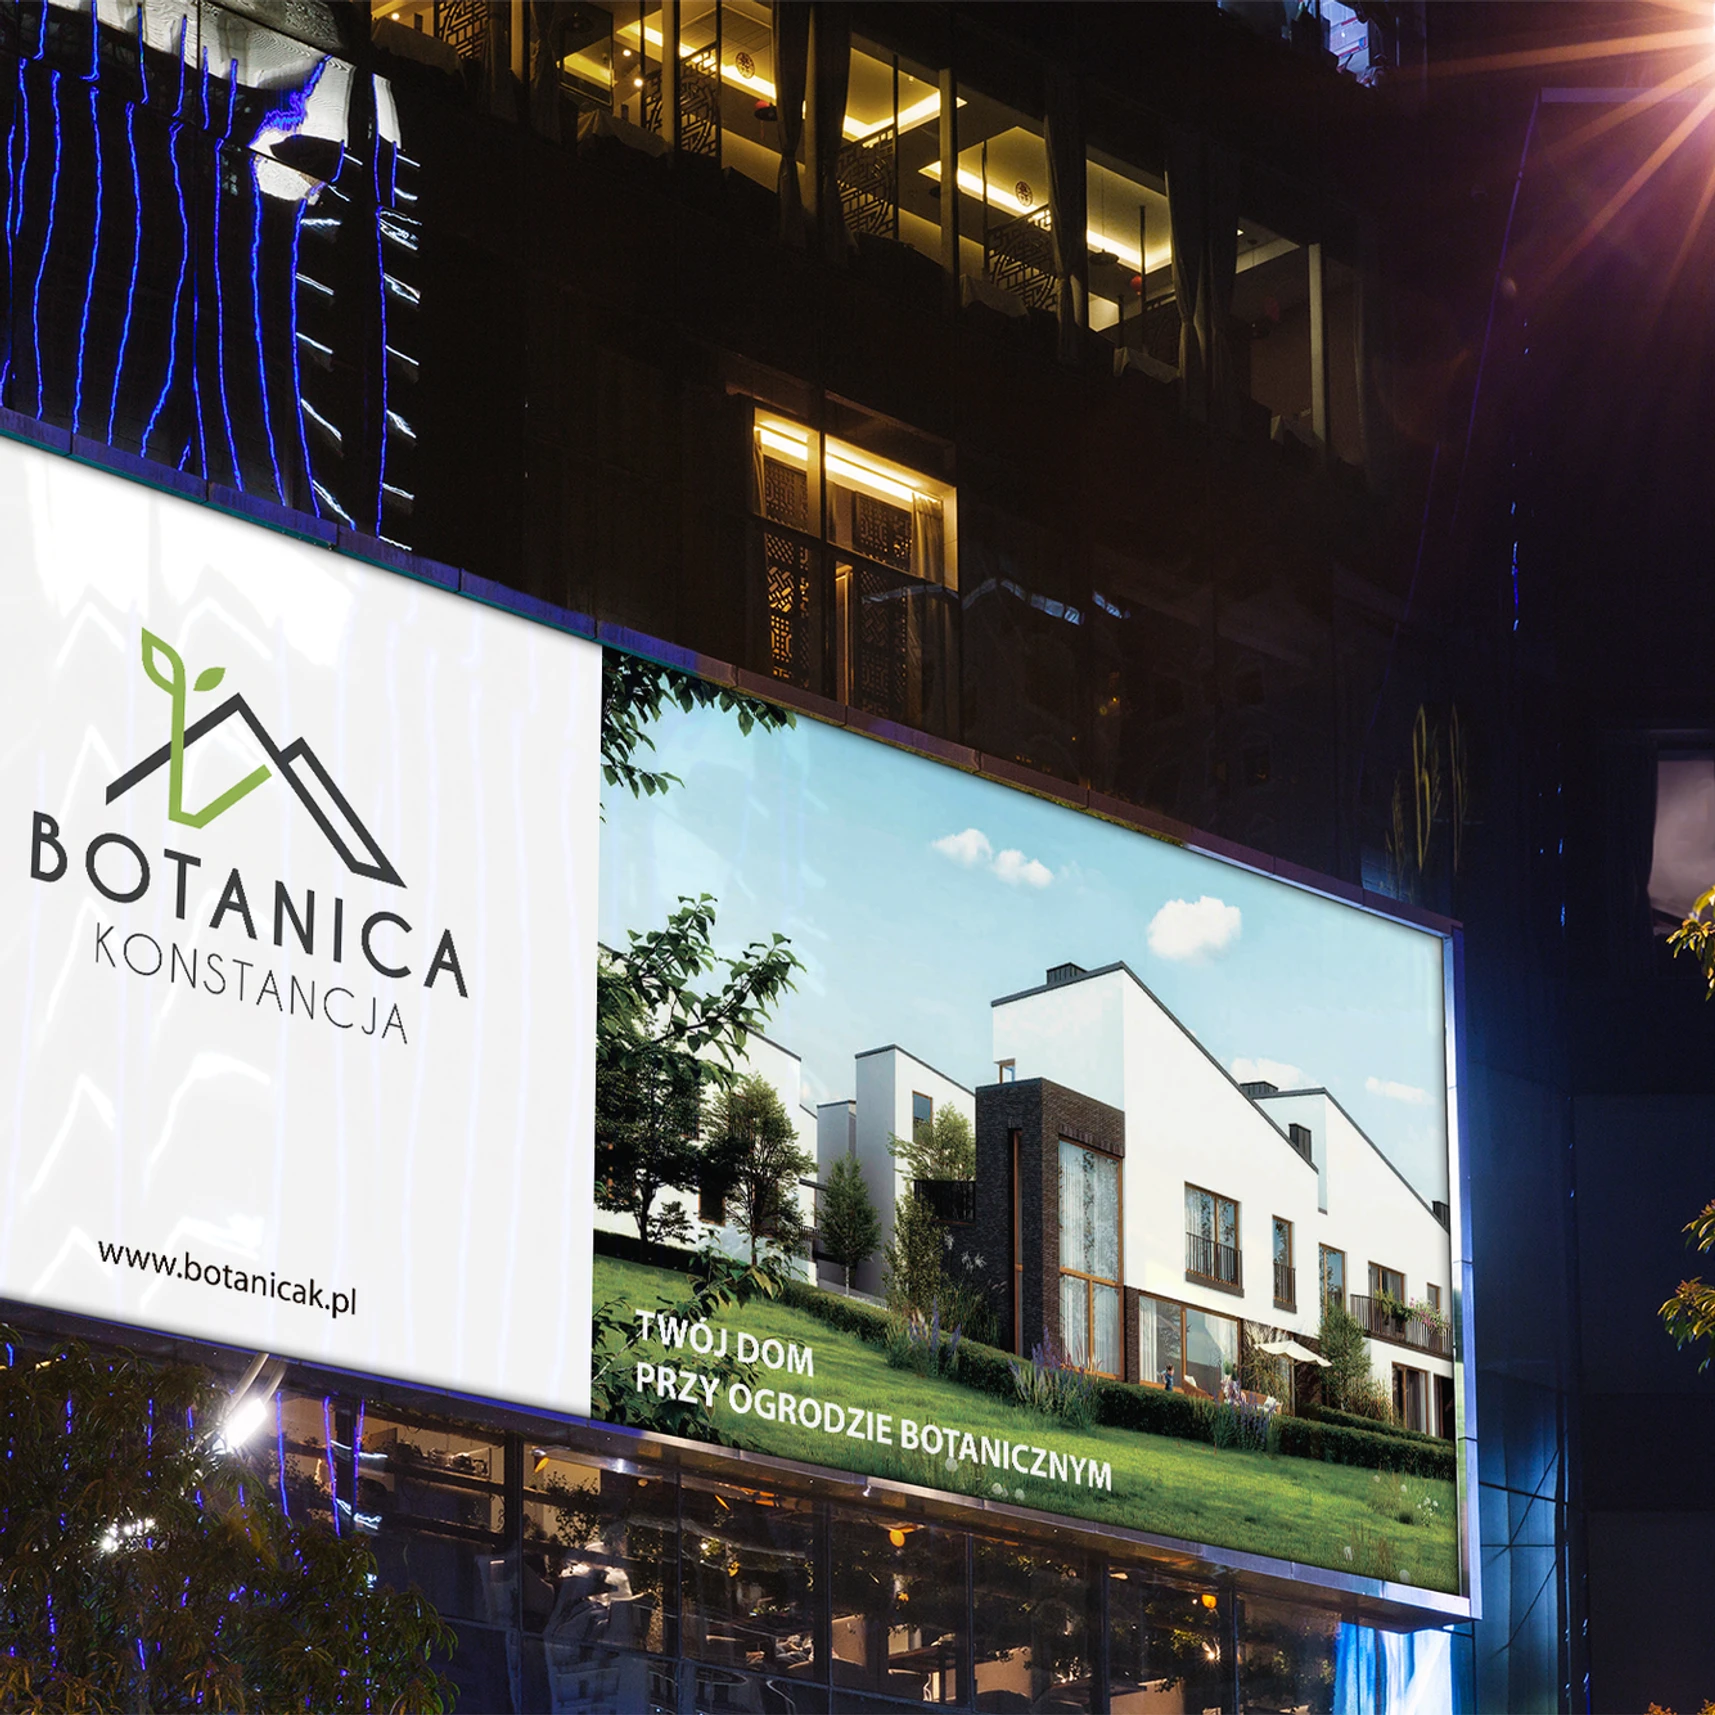 Botanica Konstanja Corporate Identity Design, branding for real estate agency